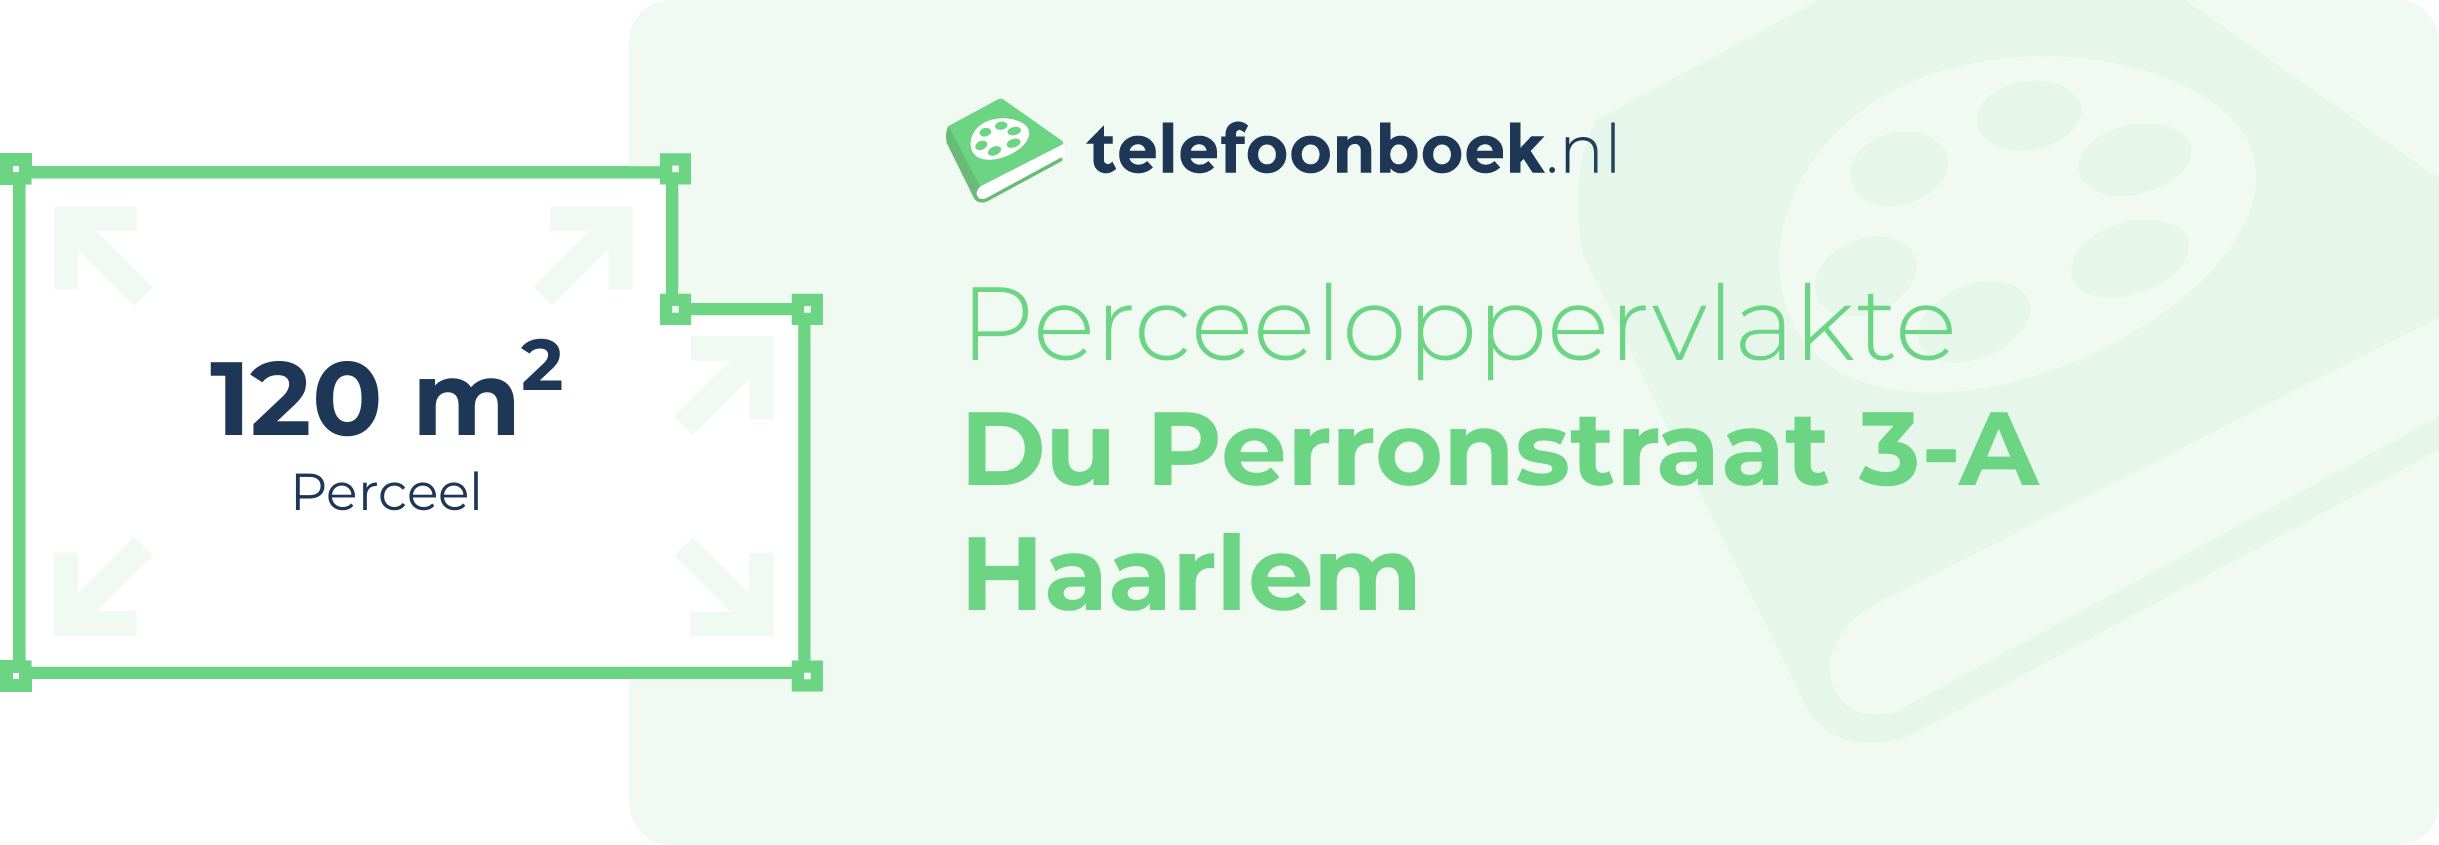 Perceeloppervlakte Du Perronstraat 3-A Haarlem